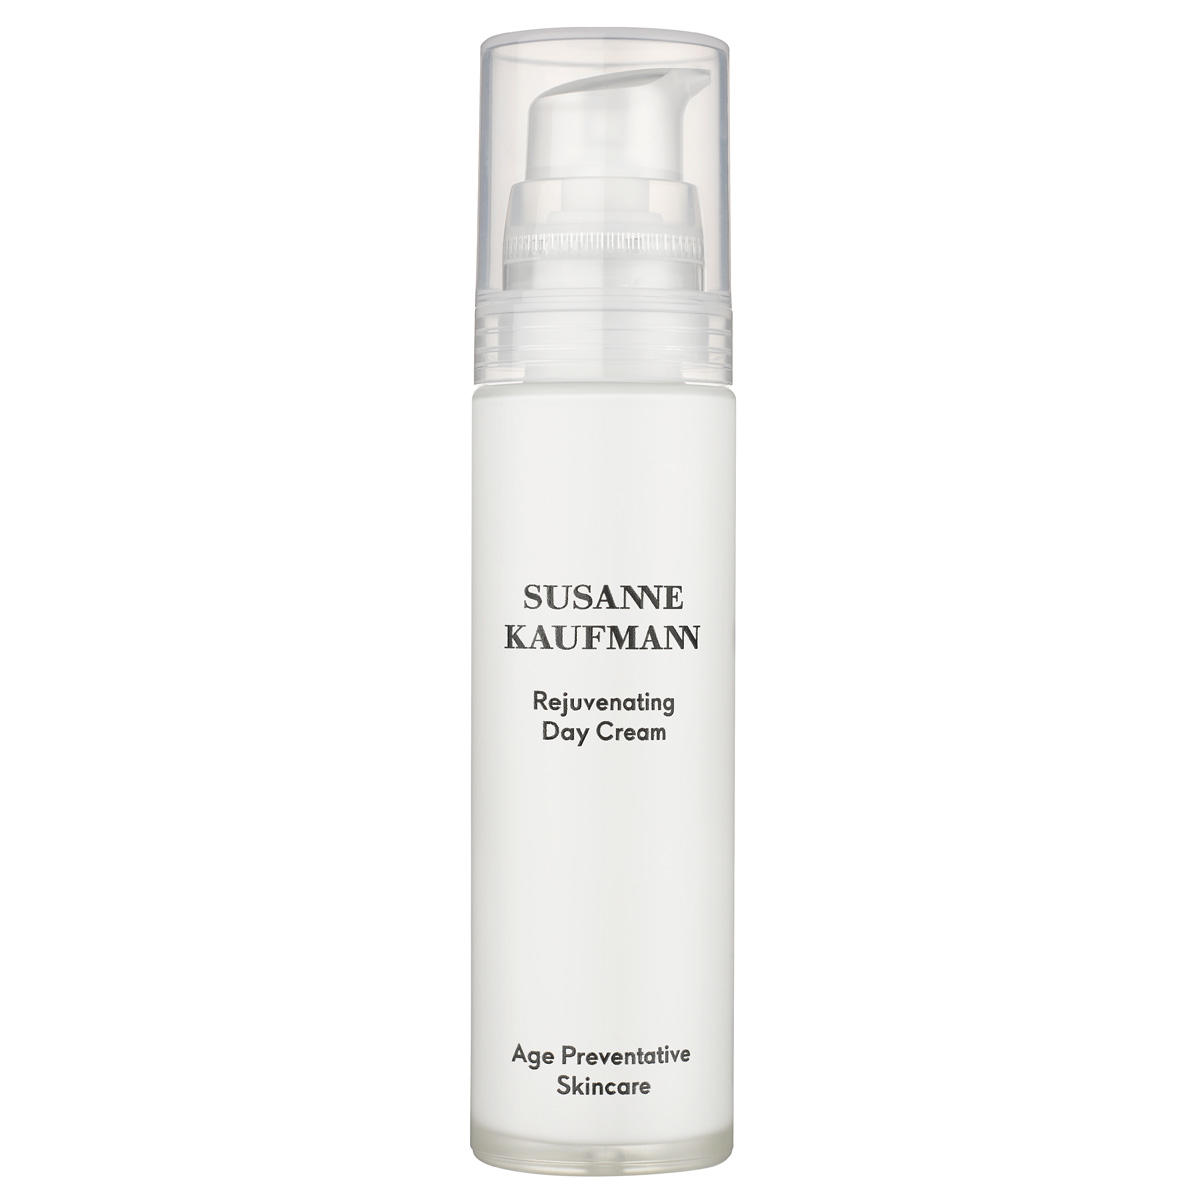 Susanne Kaufmann Age Preventative Skincare Rejuvenating Day Cream 50 ml - 1